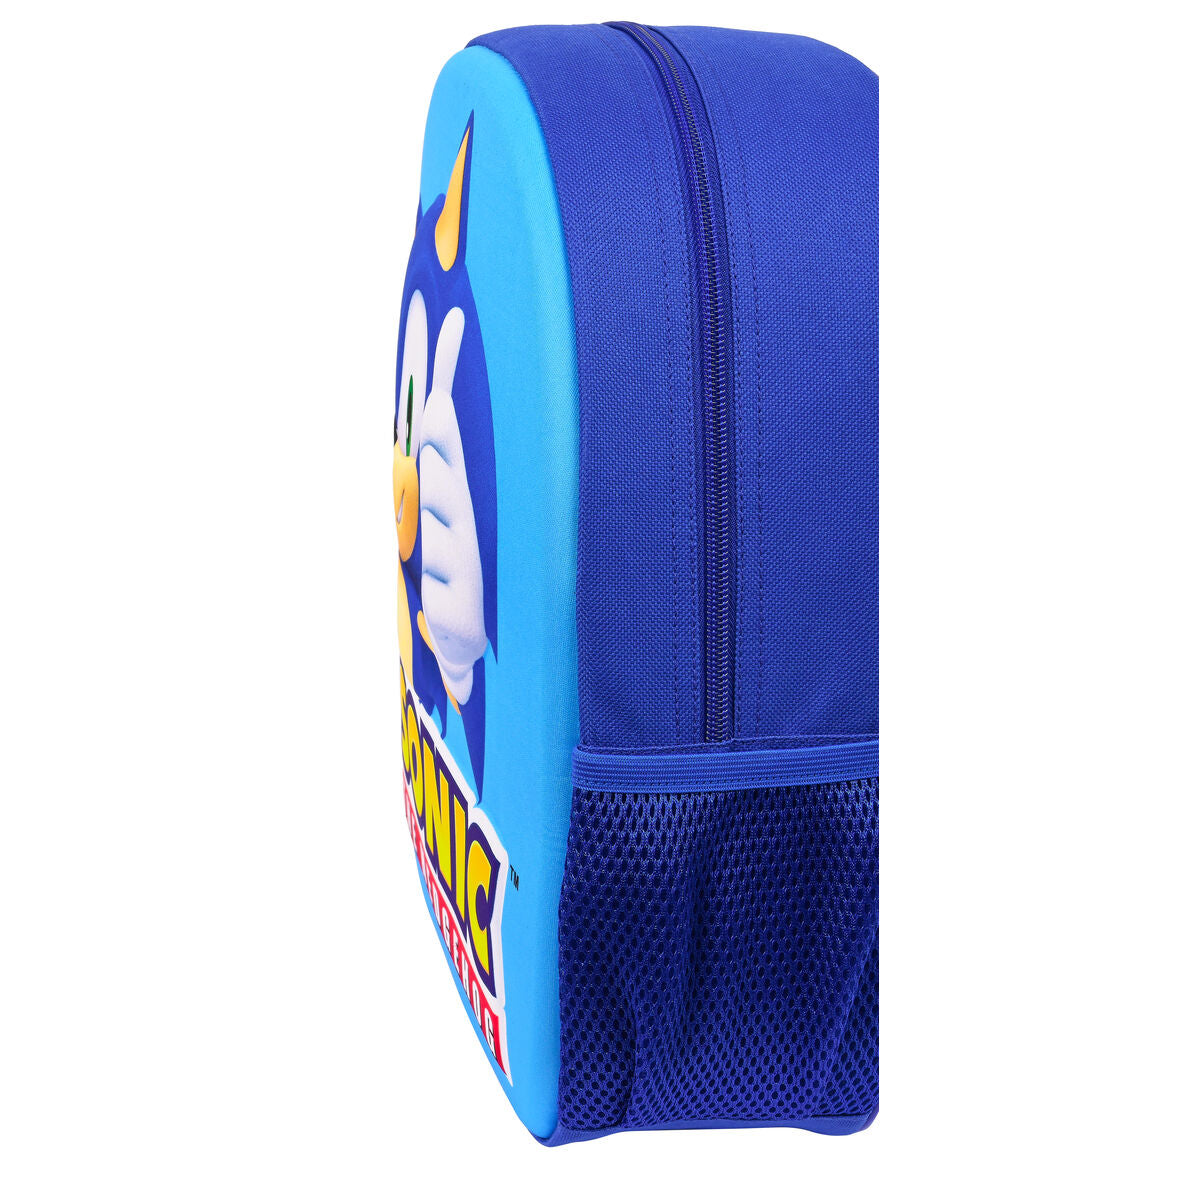 3D-schoolrugzak Sonic Speed Blauw 27 x 33 x 10 cm